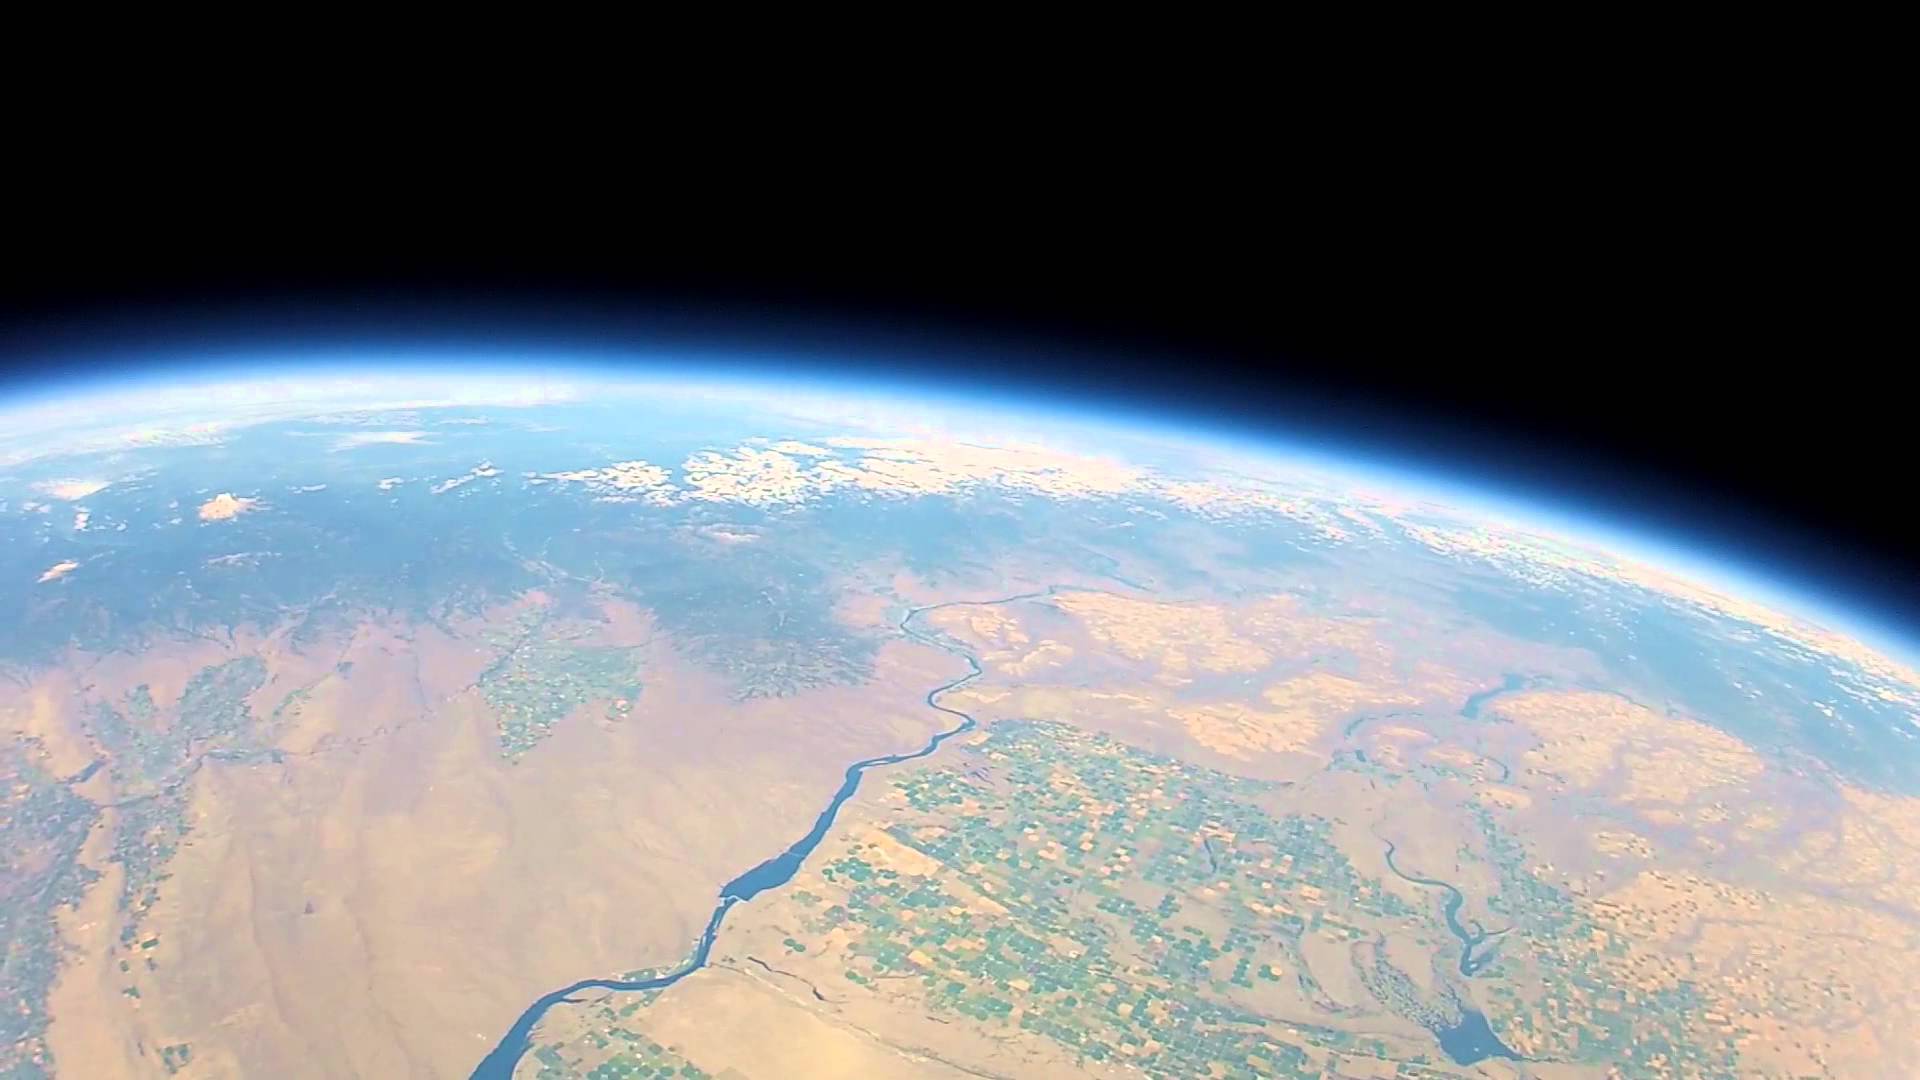 High Altitude Balloon Flight - 126,000ft - Tri-Cities, WA - YouTube